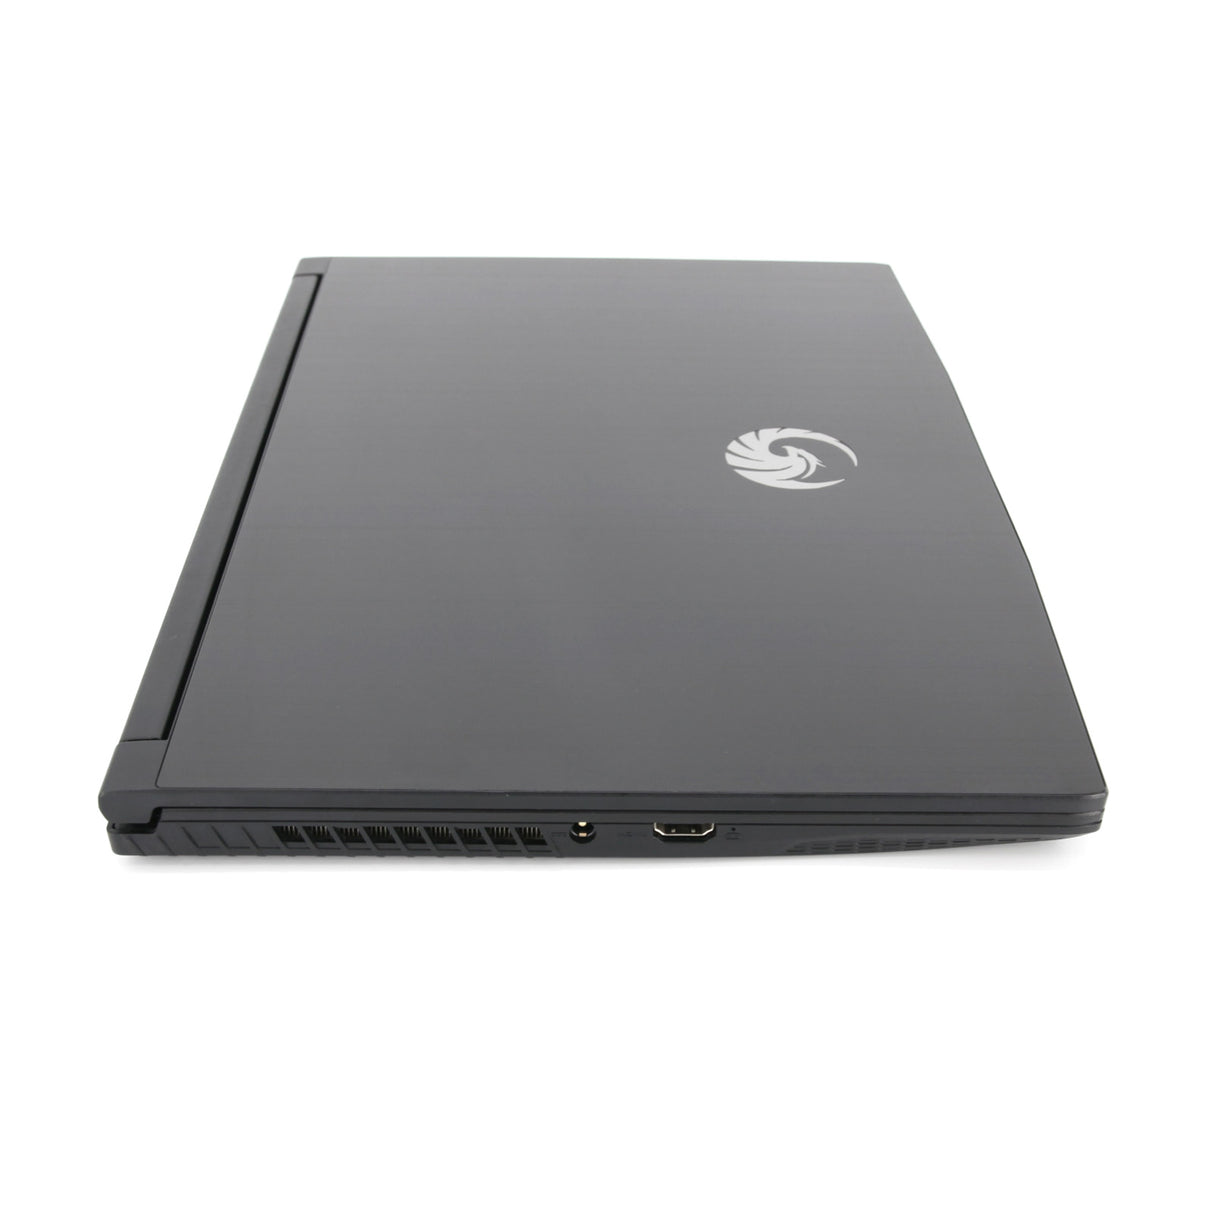 MSI Bravo 15 144Hz Gaming Laptop: Ryzen 5 4600H, 8GB, 256GB, RX 5500M, Warranty - GreenGreenStoreUK